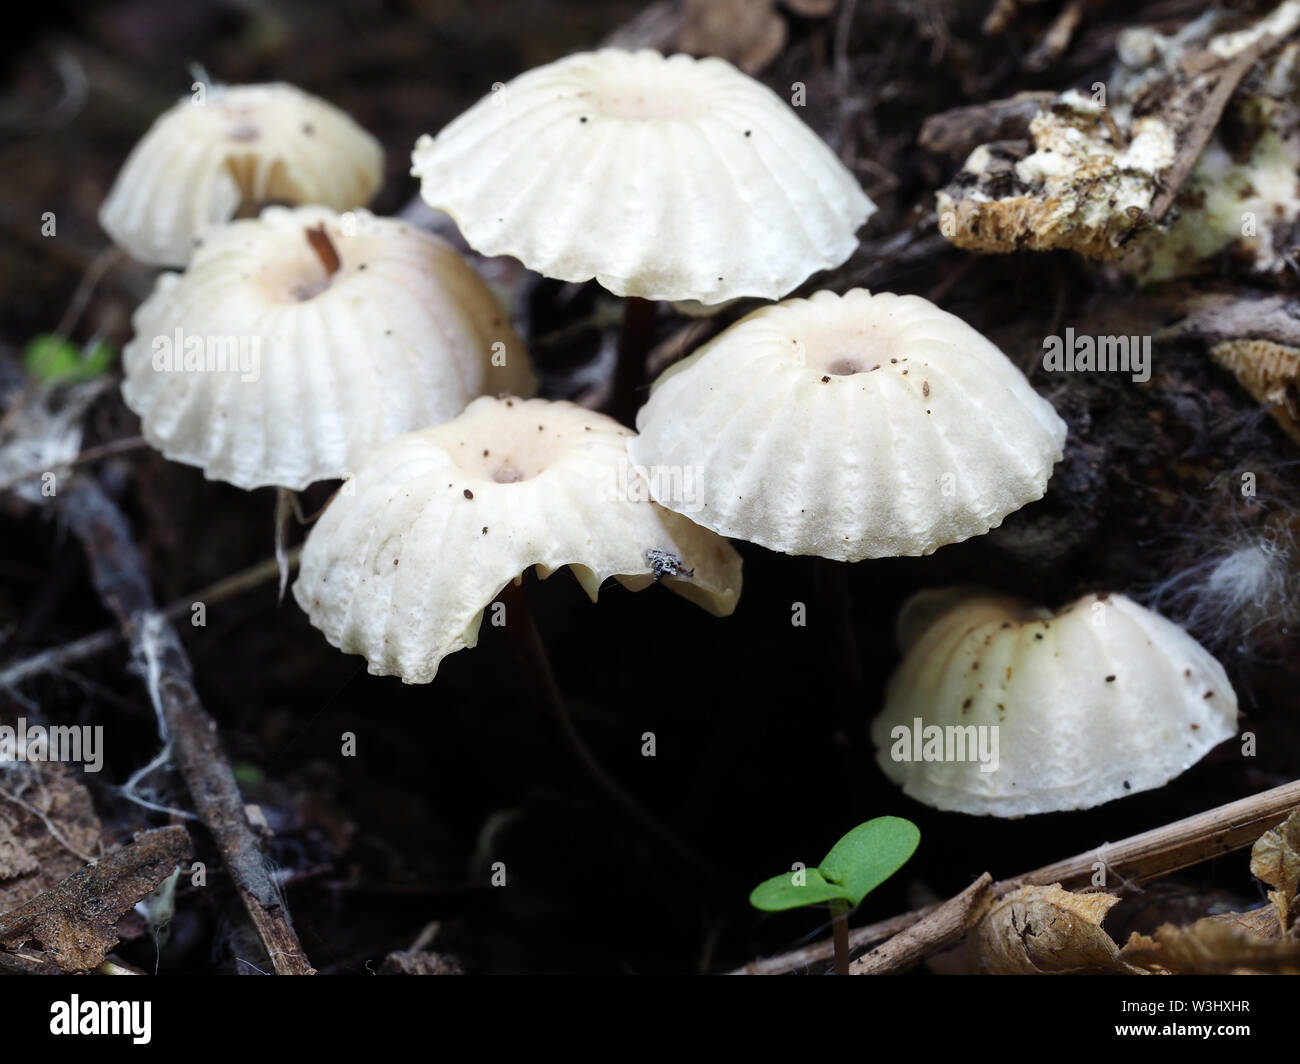 Omphalinoid mushrooms Stock Photo